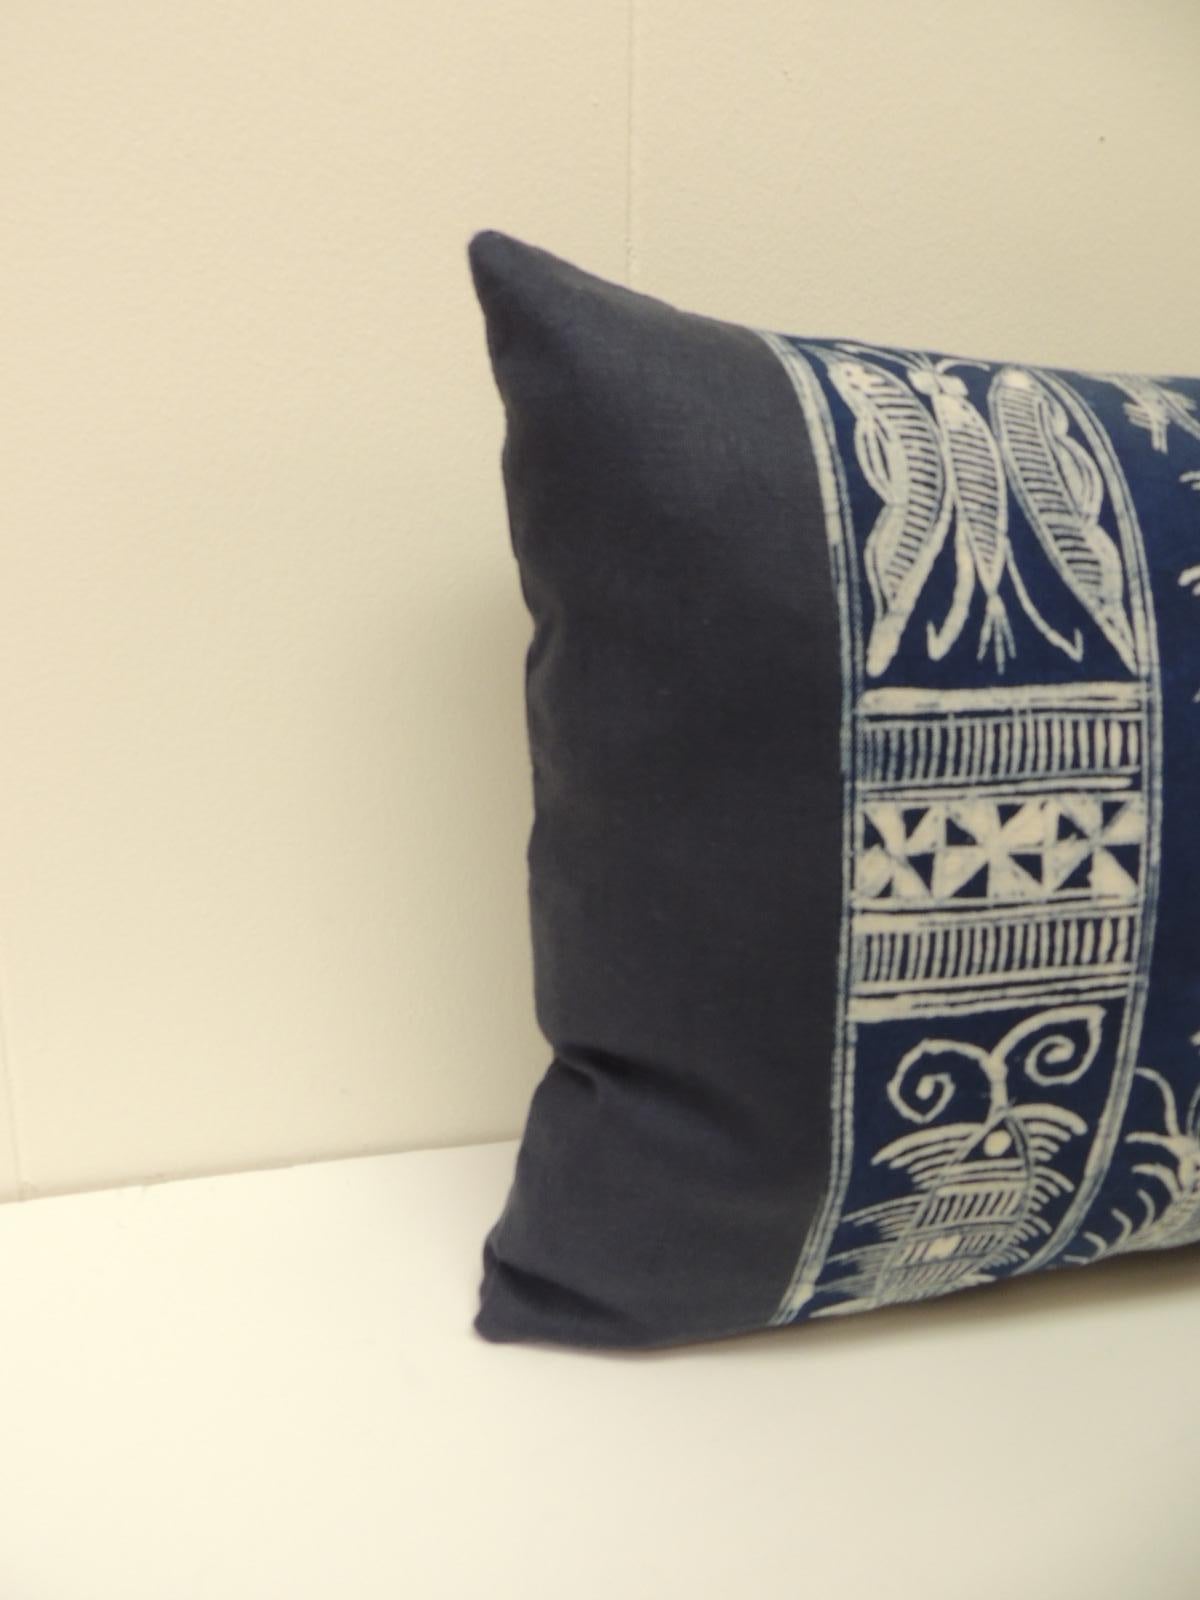 Vintage indigo and white hand blocked artisanal Batik textile lumbar decorative pillow with a
 motif depicting stylized paisleys. Vintage indigo and white Batik textile framed with a dark 
blue linen; same as backings. Elegant boho-chic